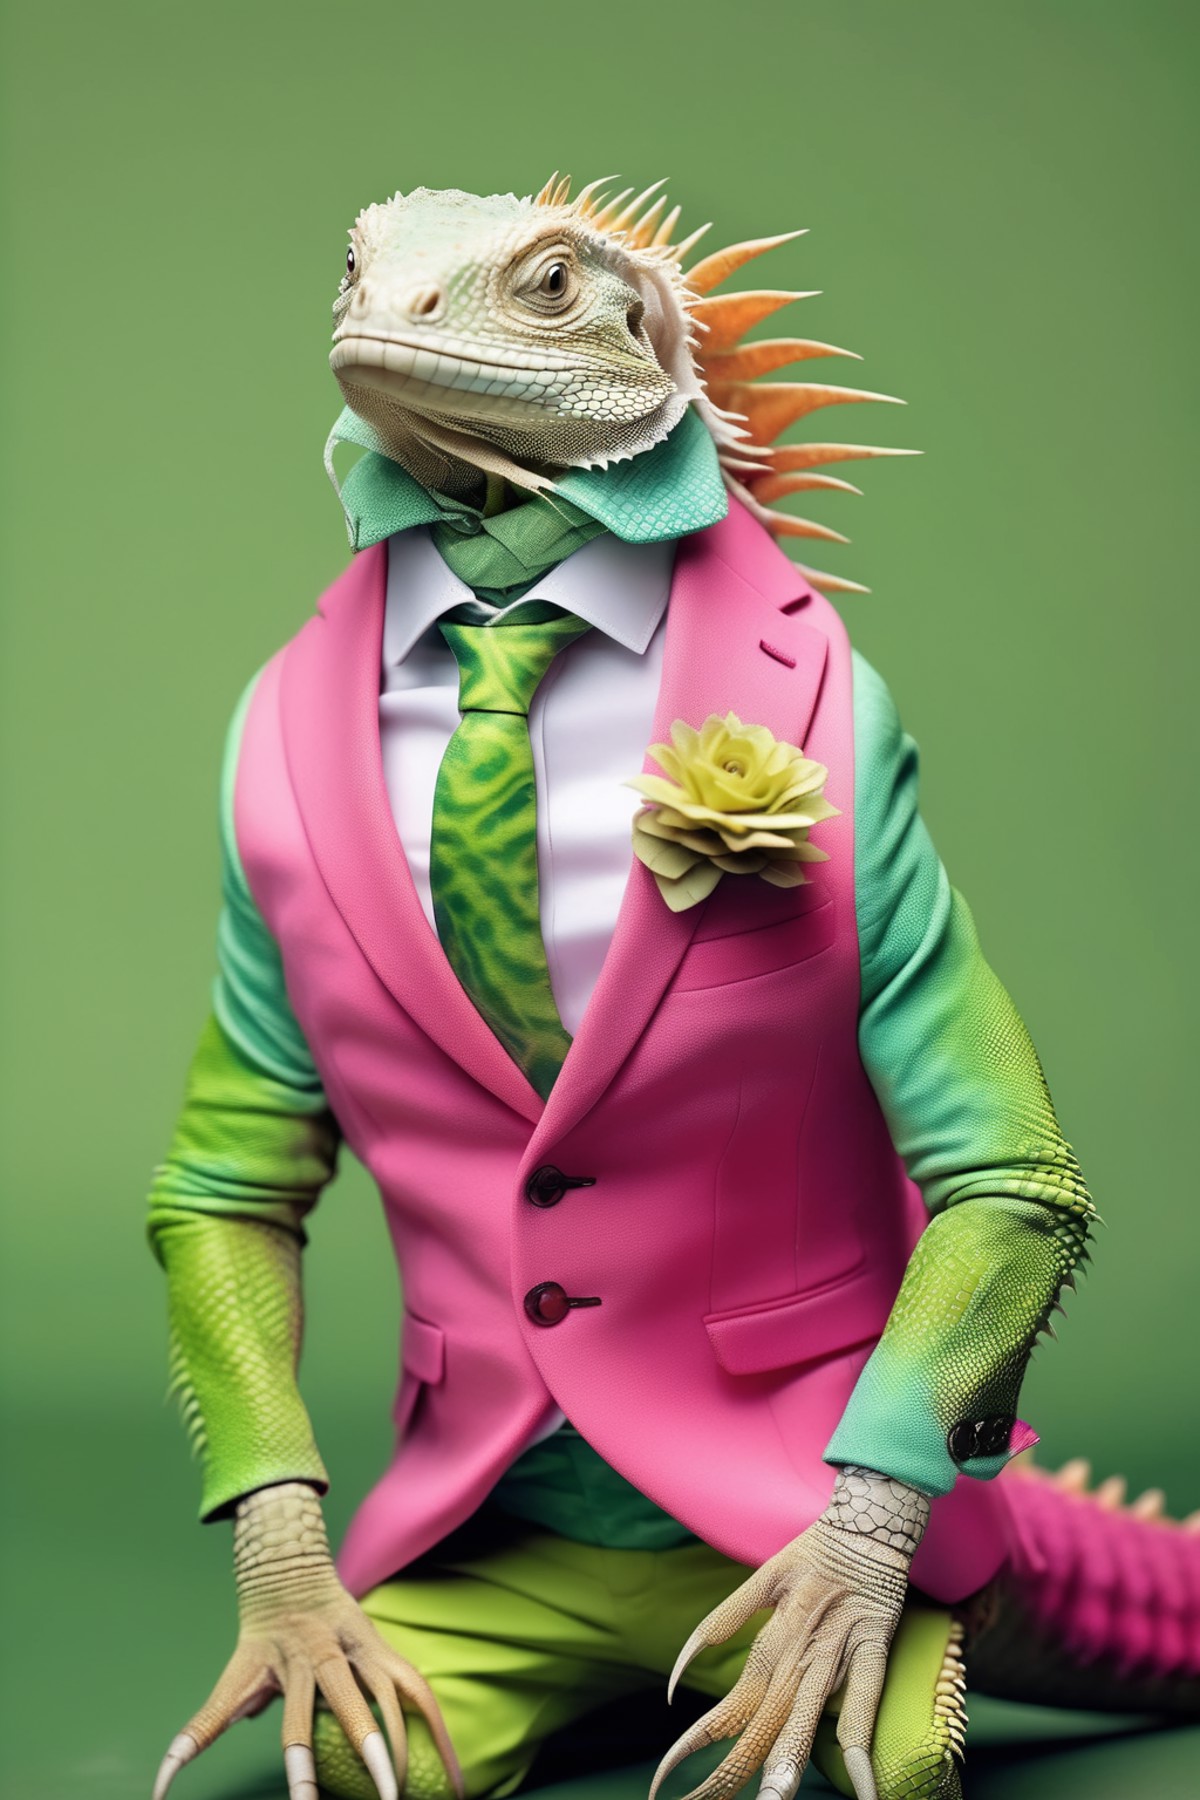 <lora:Dressed animals:1>Dressed animals - iguana having a great fashion sense